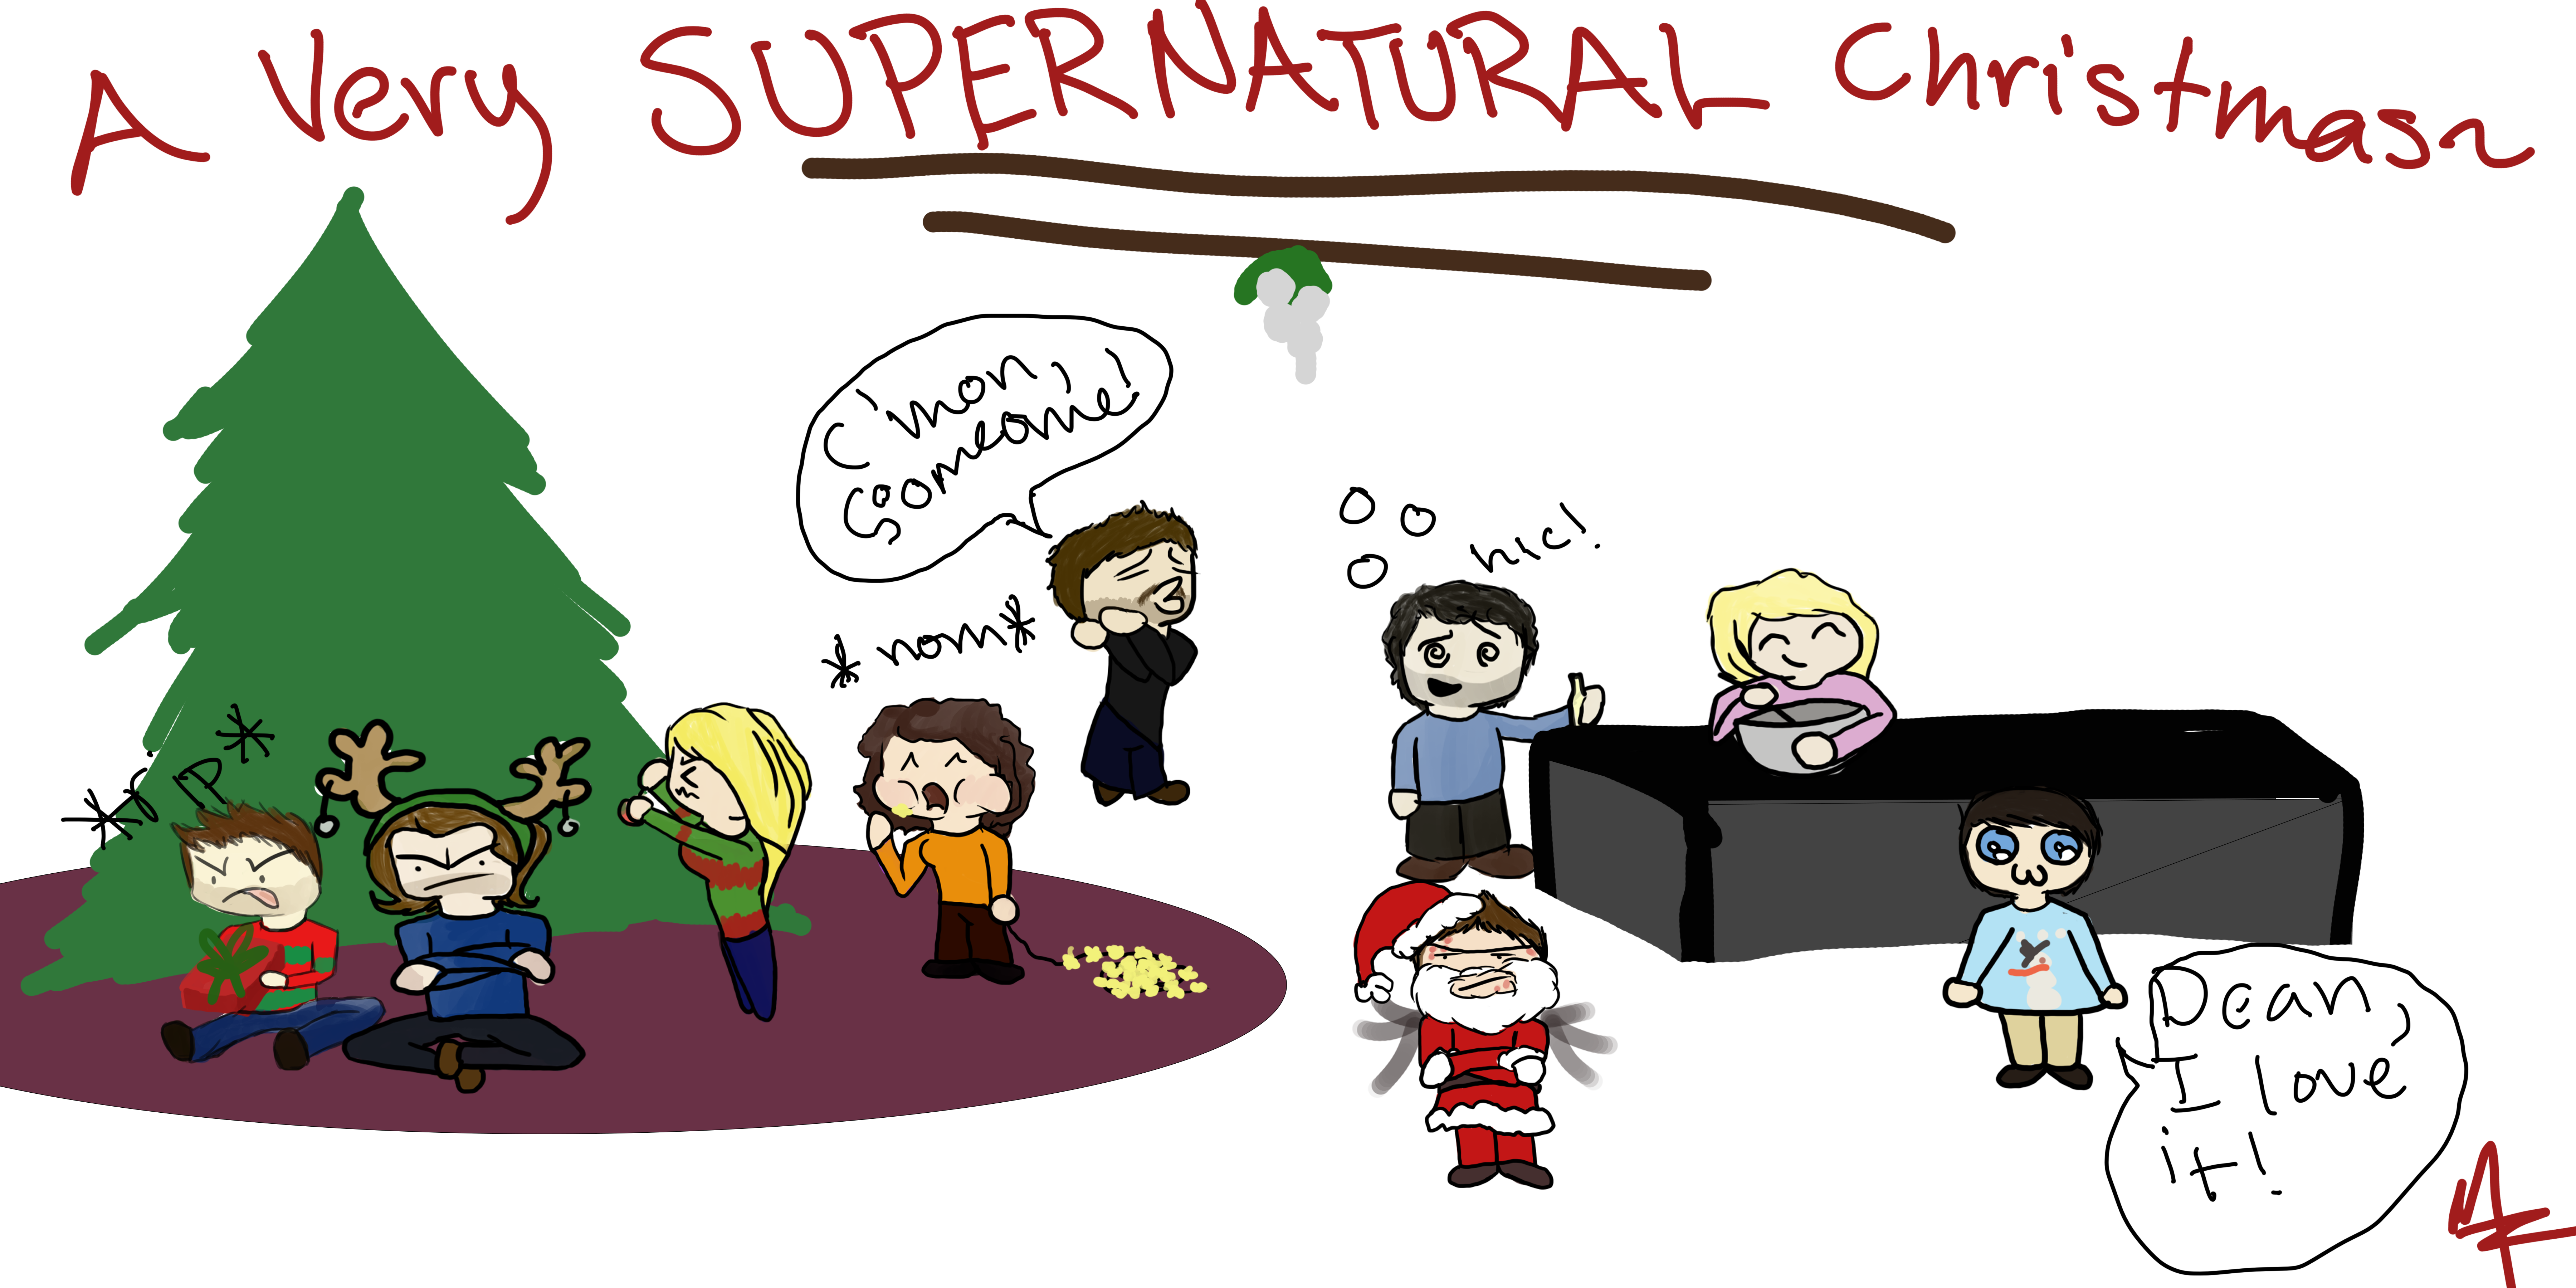 Supernatural Christmas Wallpaper A Very